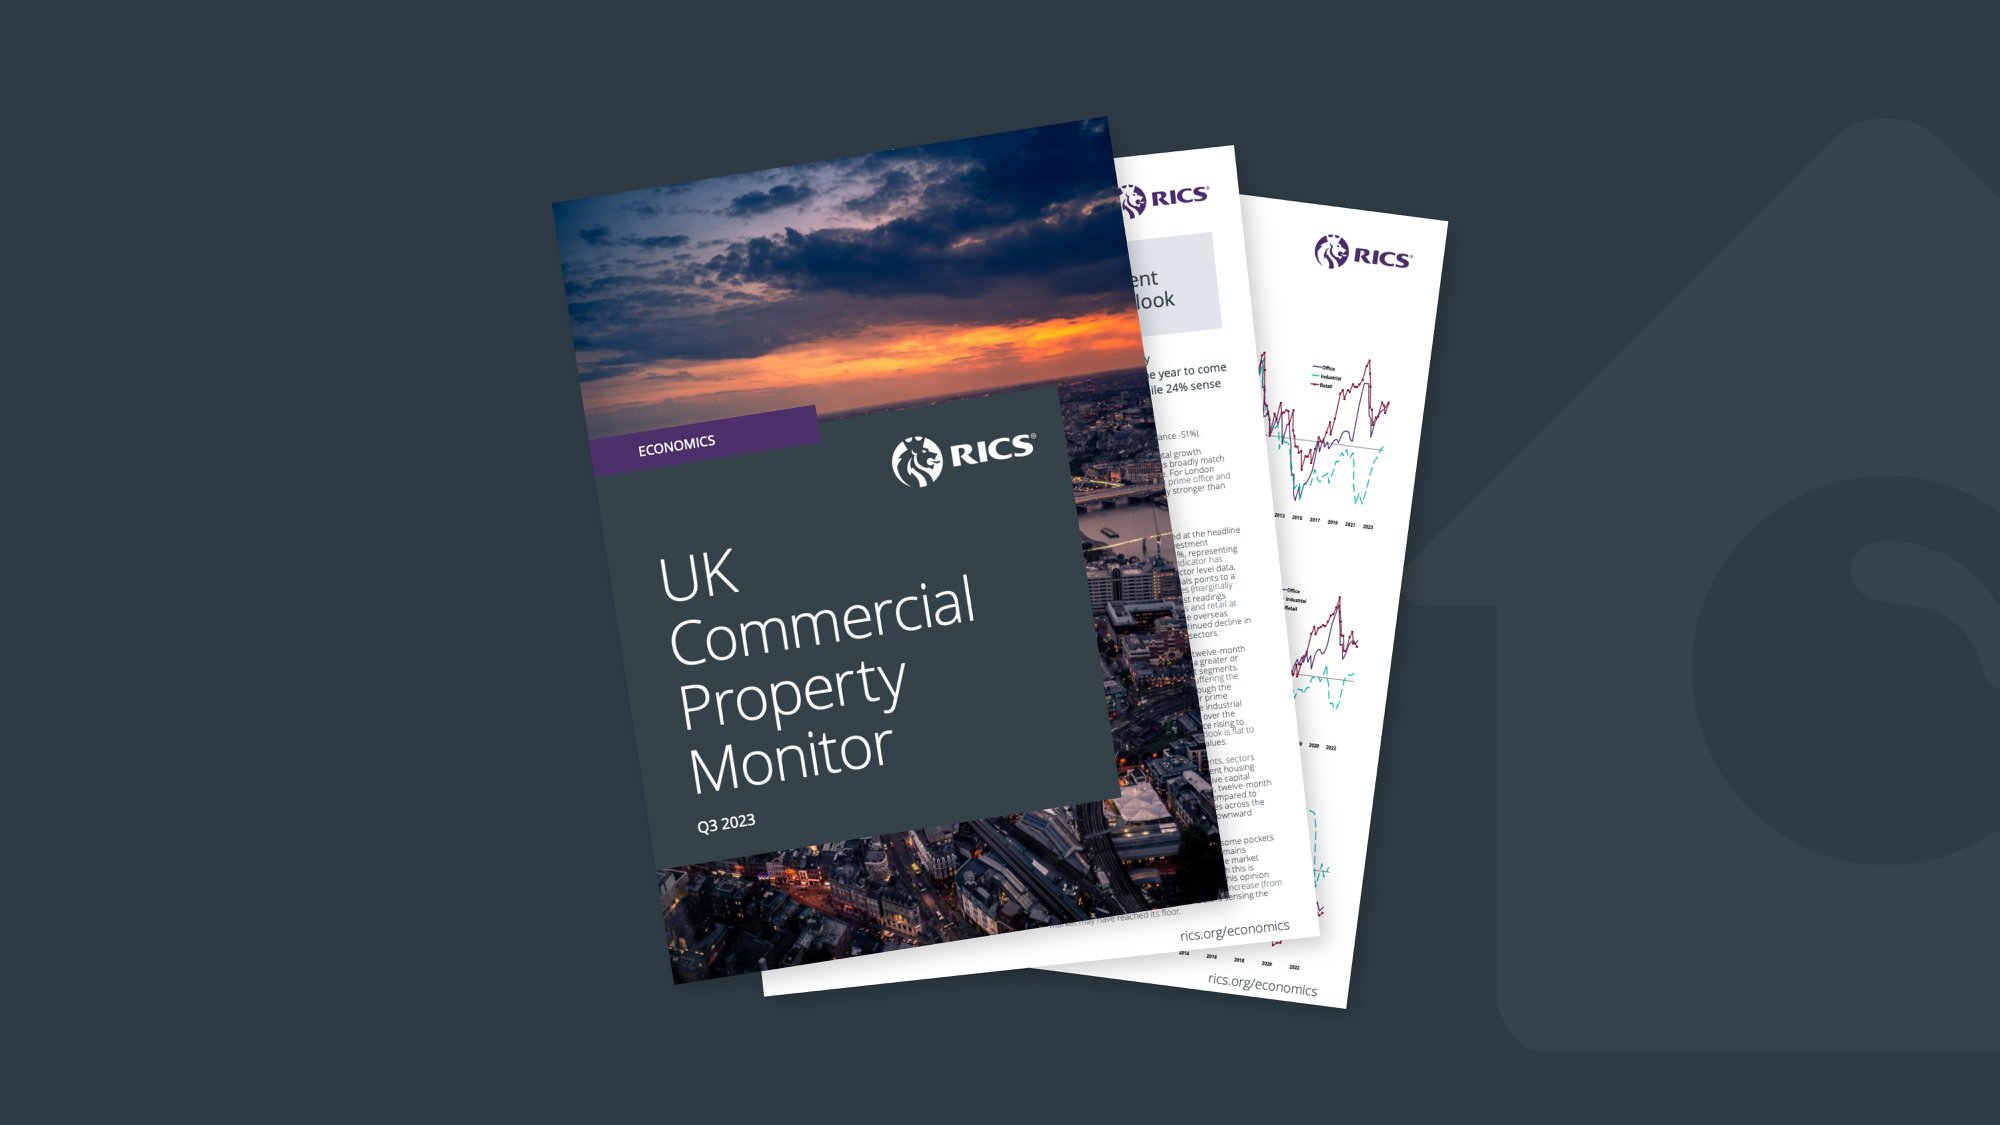 RICS UK Commercial Property Monitor Paints a Bleak Picture